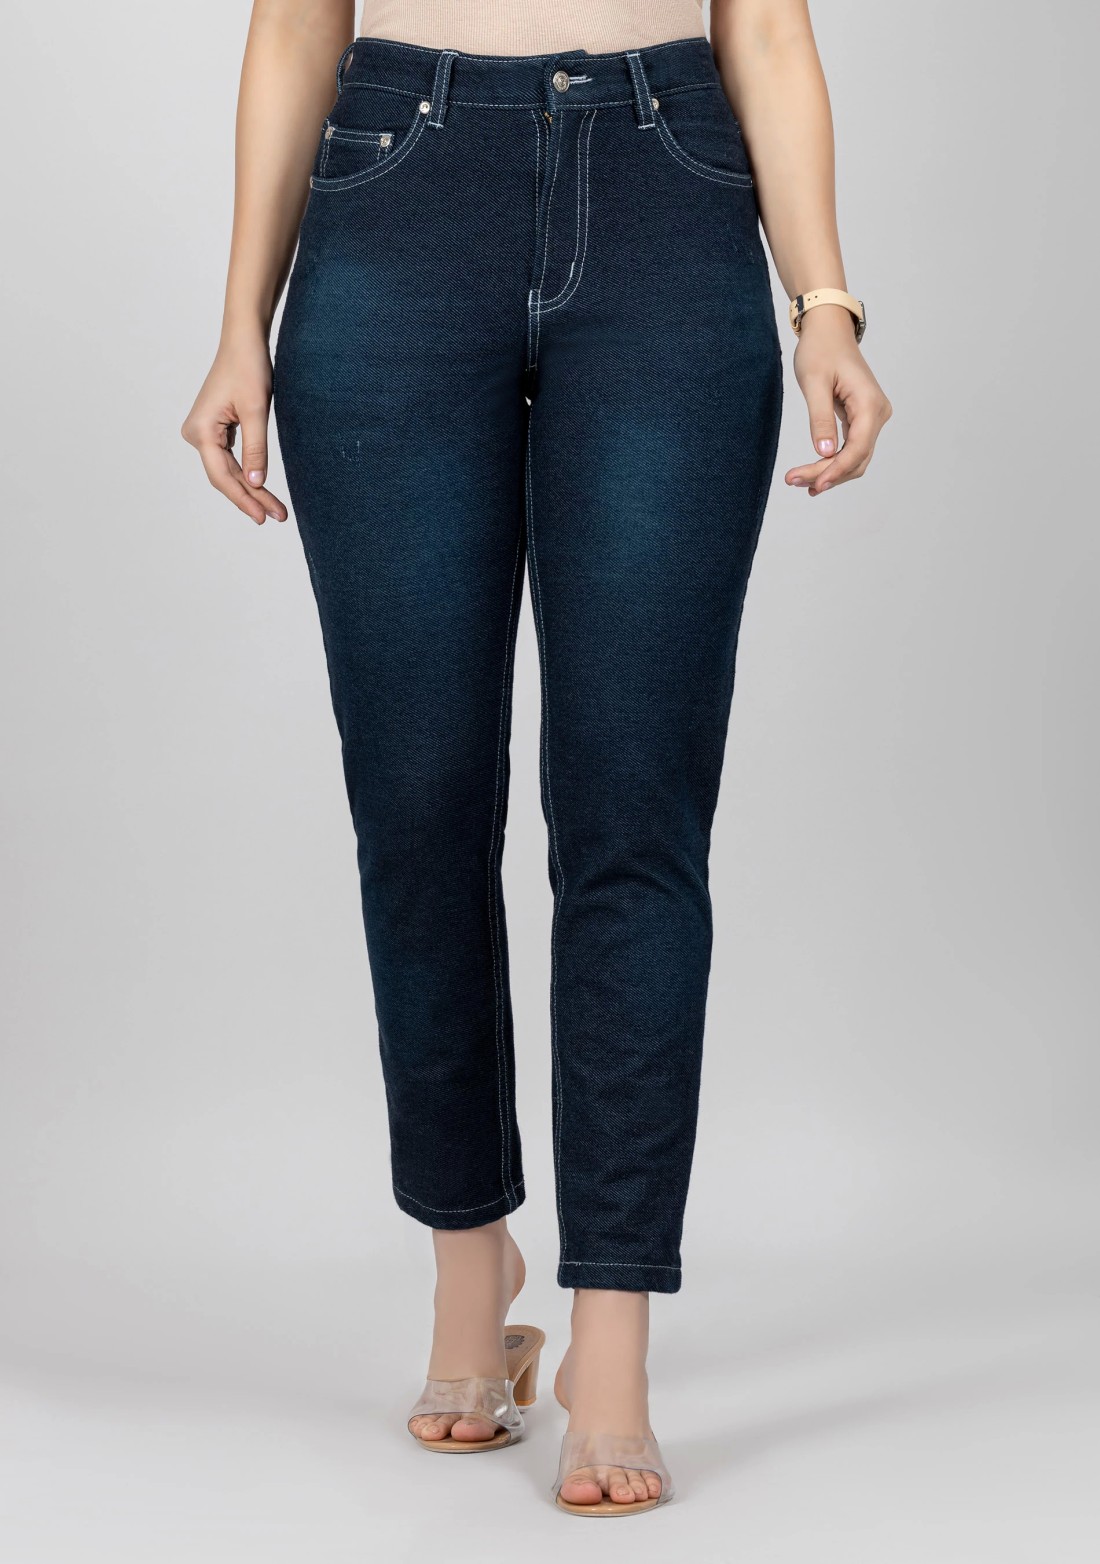 Blue Slim Fit High Rise Women's Jeans - Buy Online in India @ Mehar